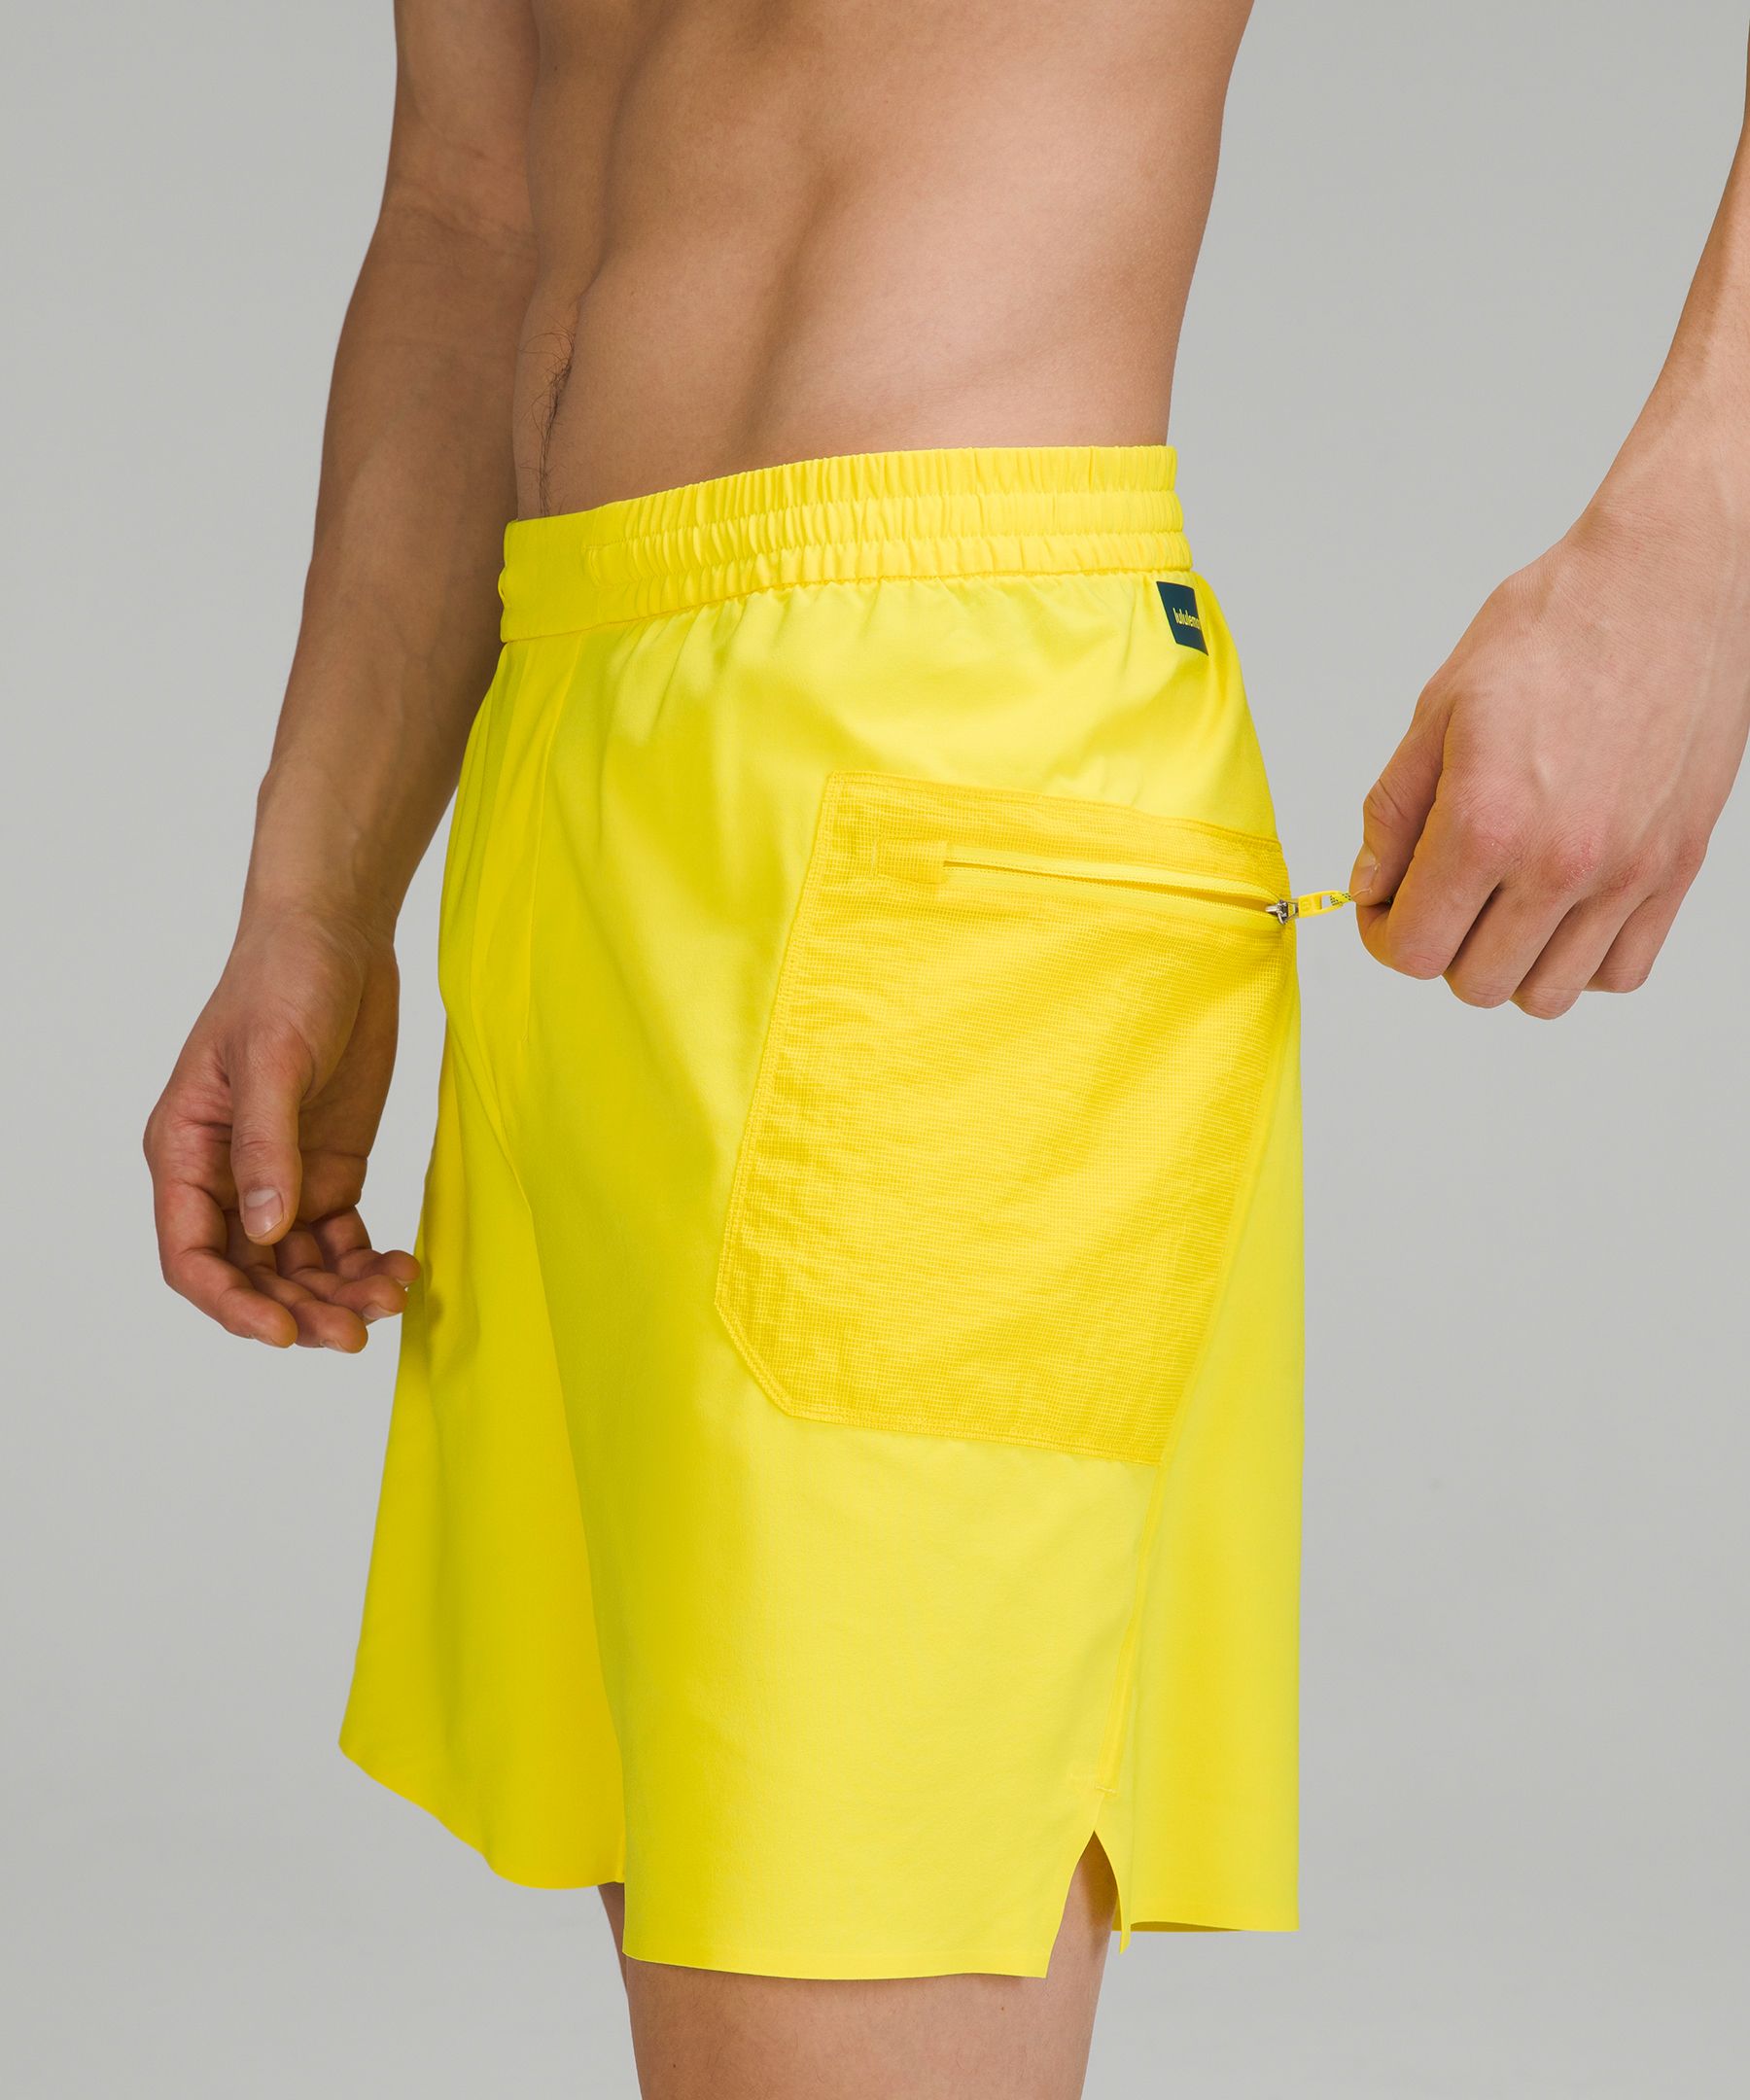 lululemon Men's 8-Inch Water-Repellent Hiking Shorts Size Large